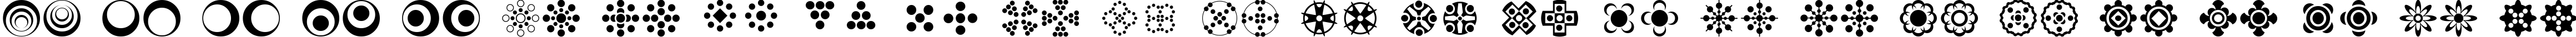 Пример написания английского алфавита шрифтом Circle Things 2